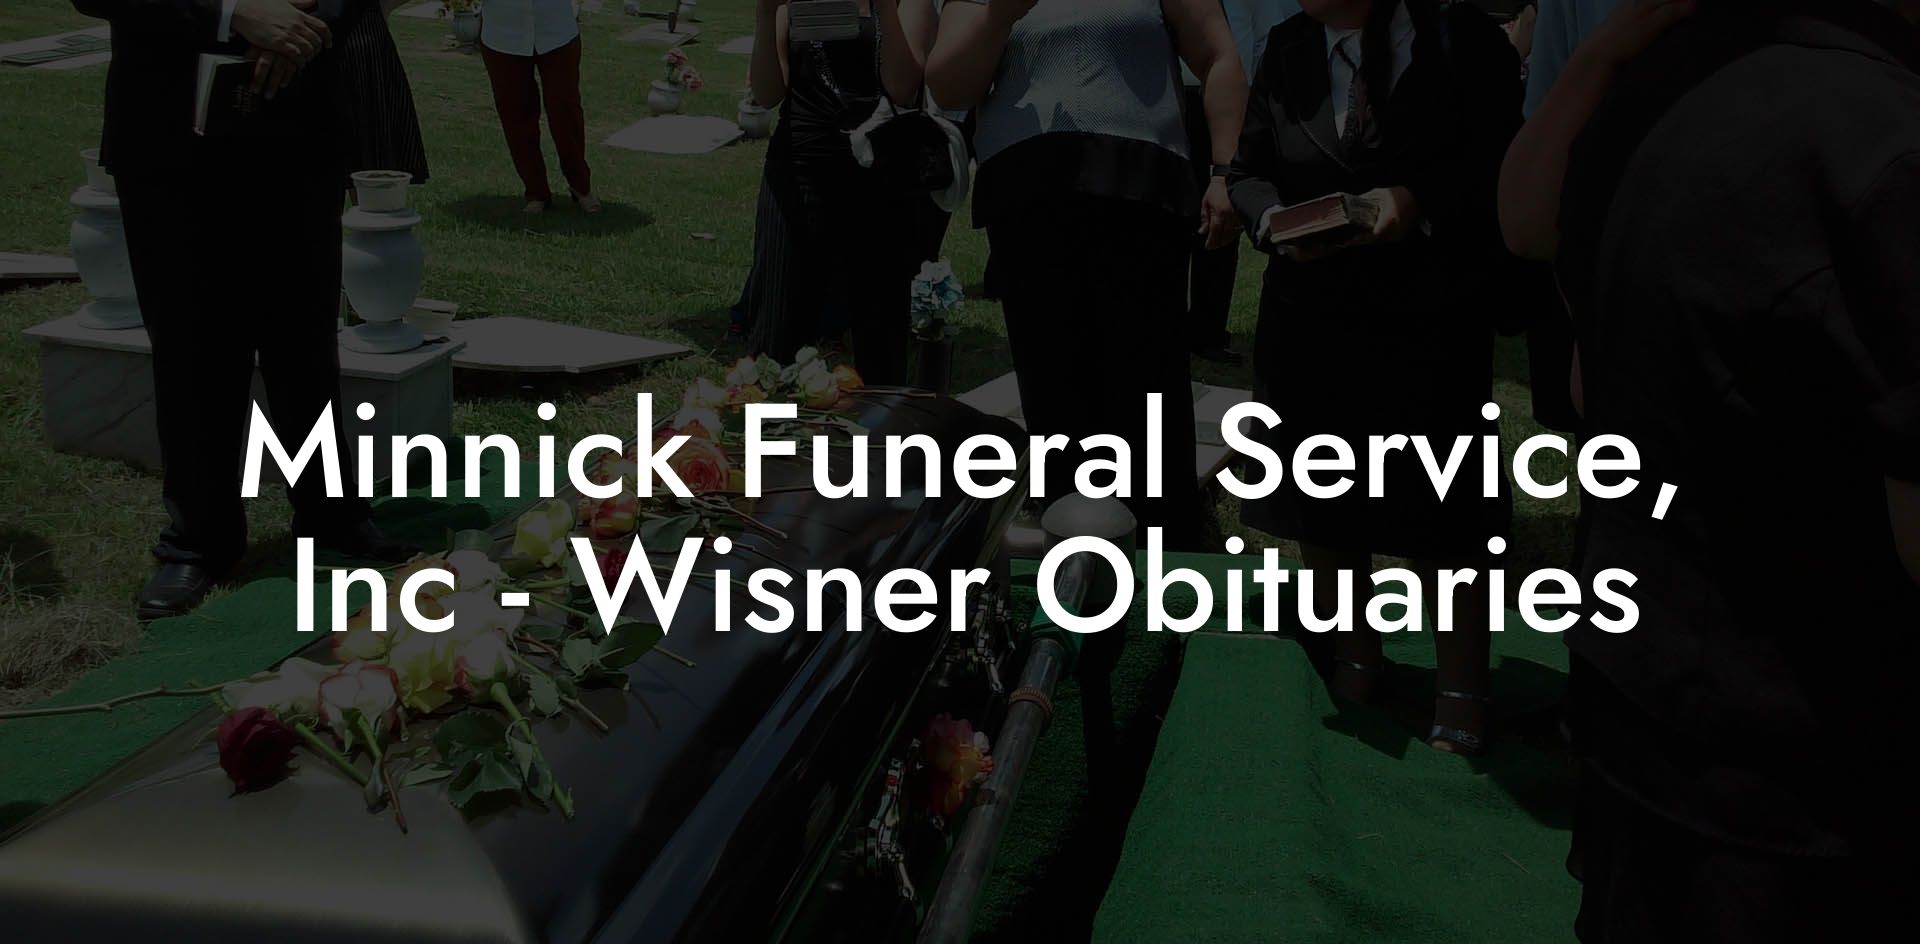 Minnick Funeral Service, Inc - Wisner Obituaries